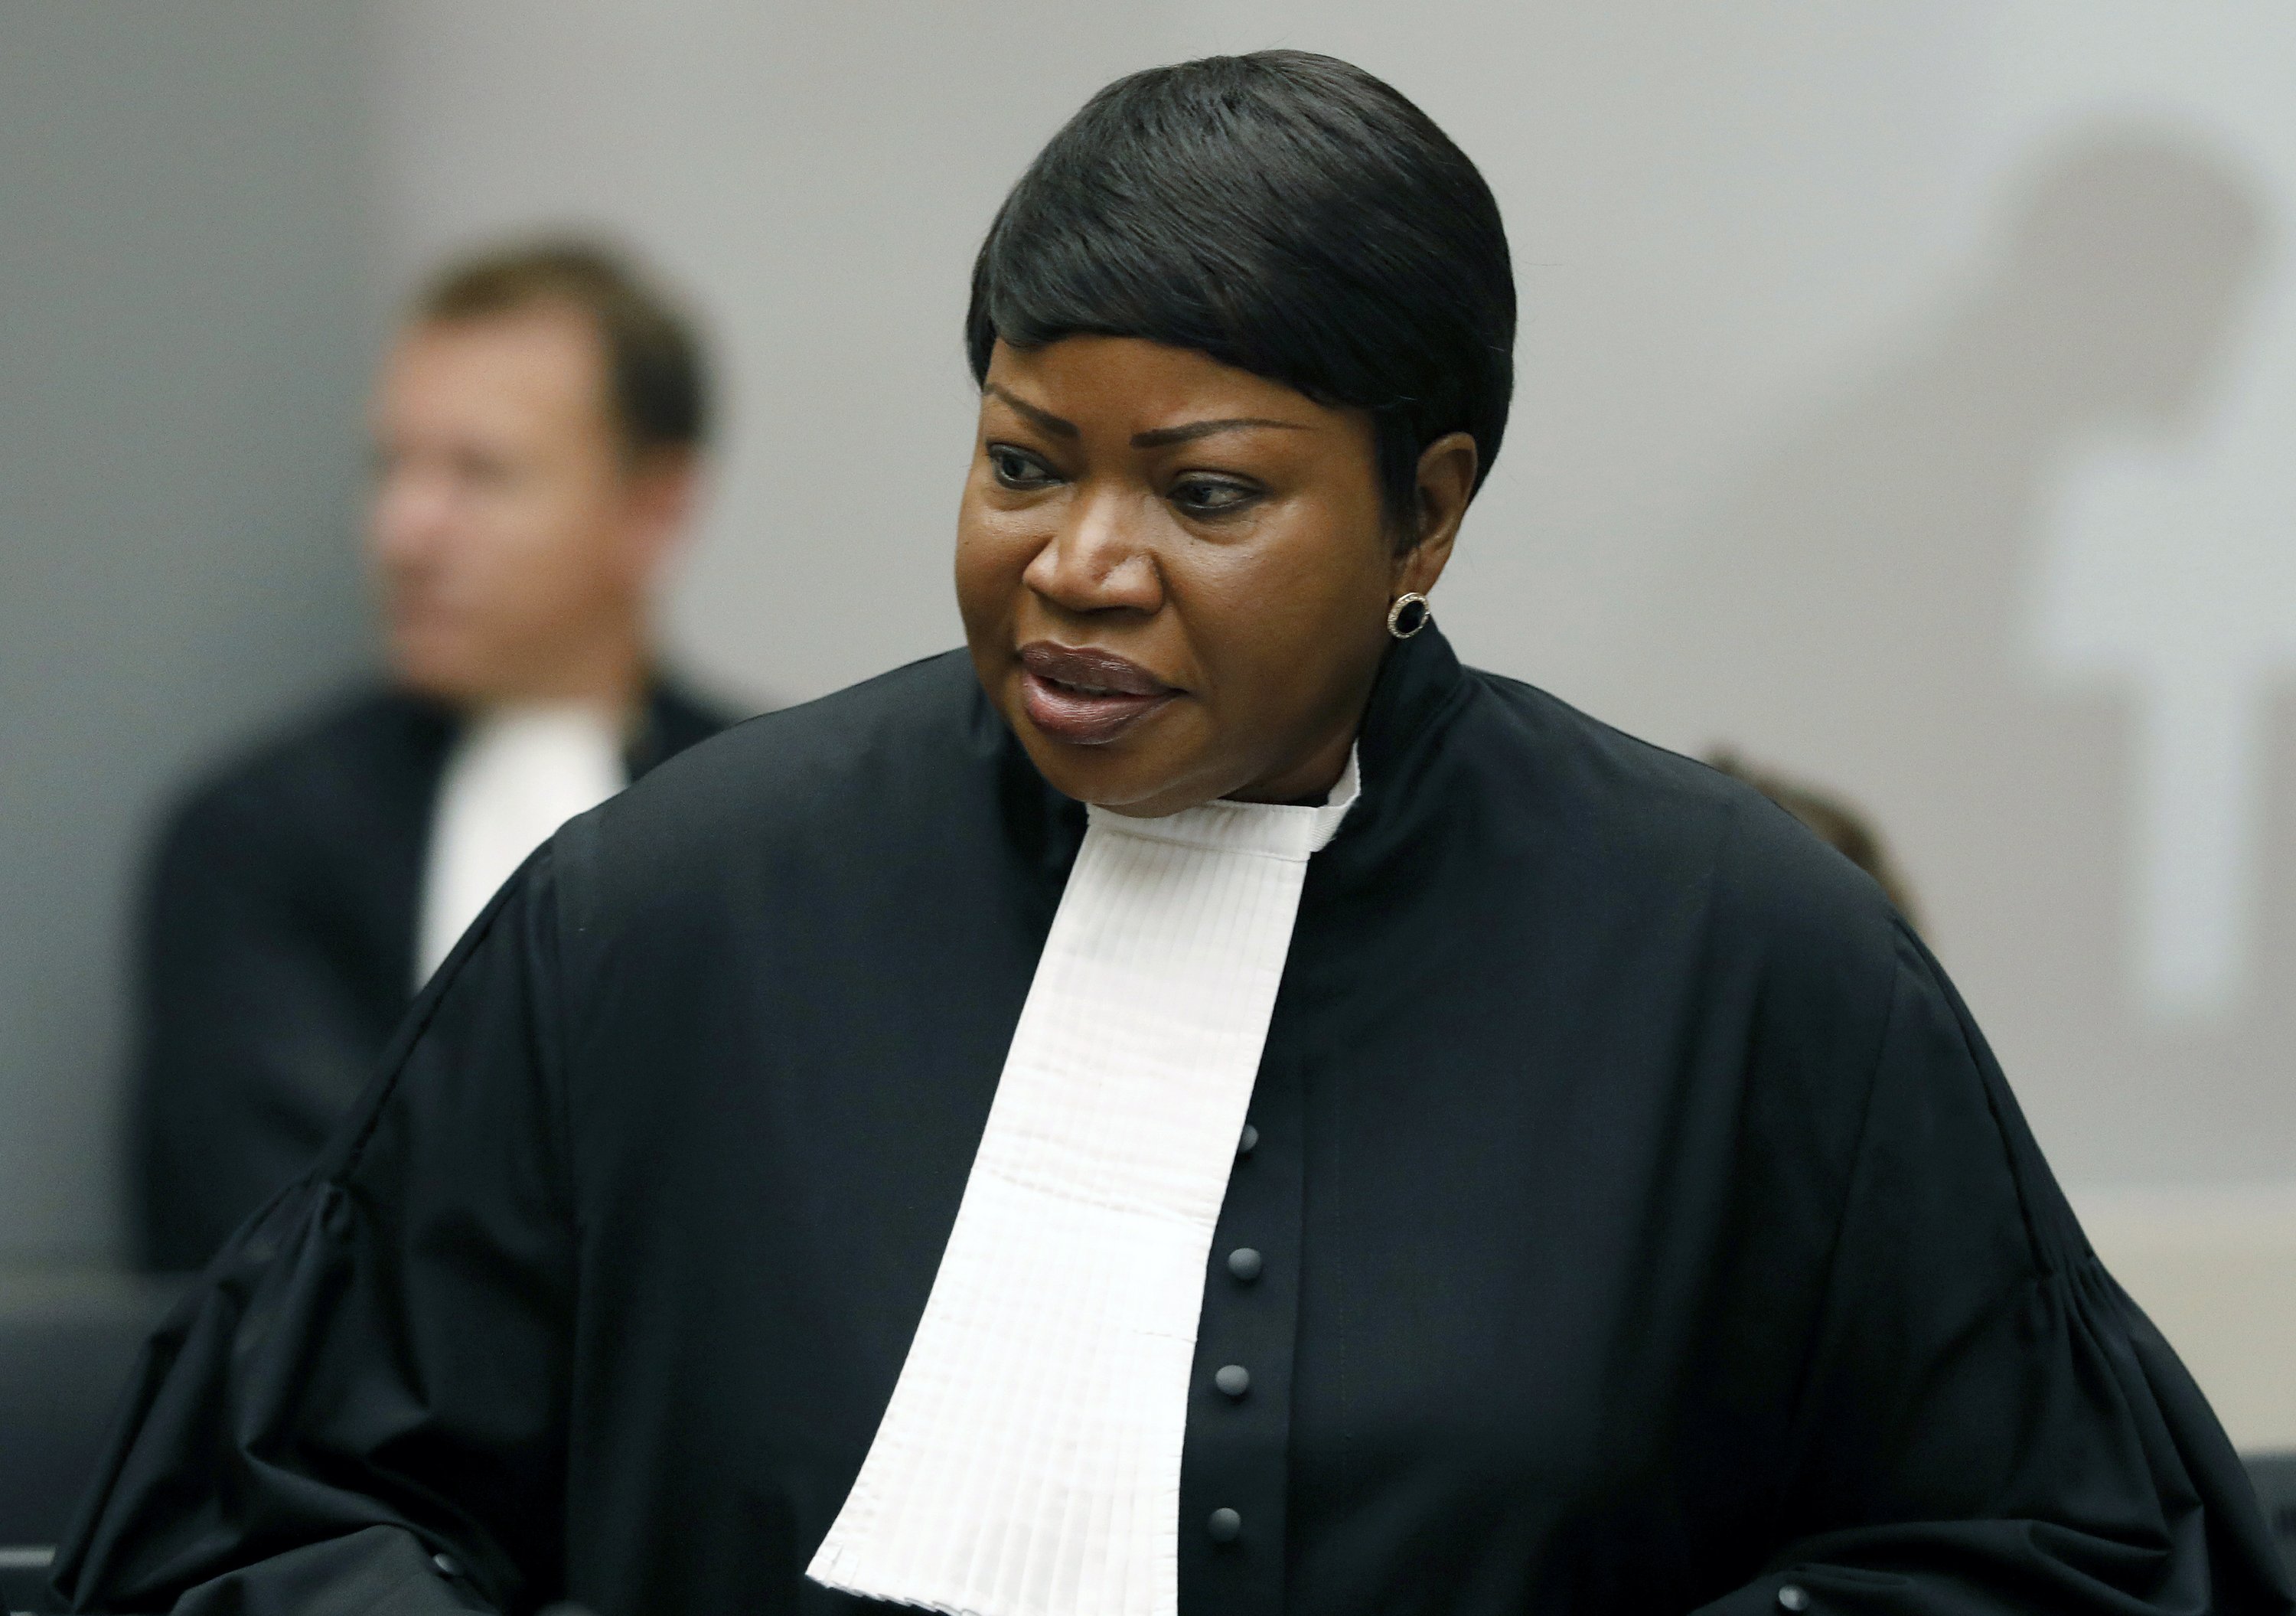 ICC launches war crimes investigating Israeli practices